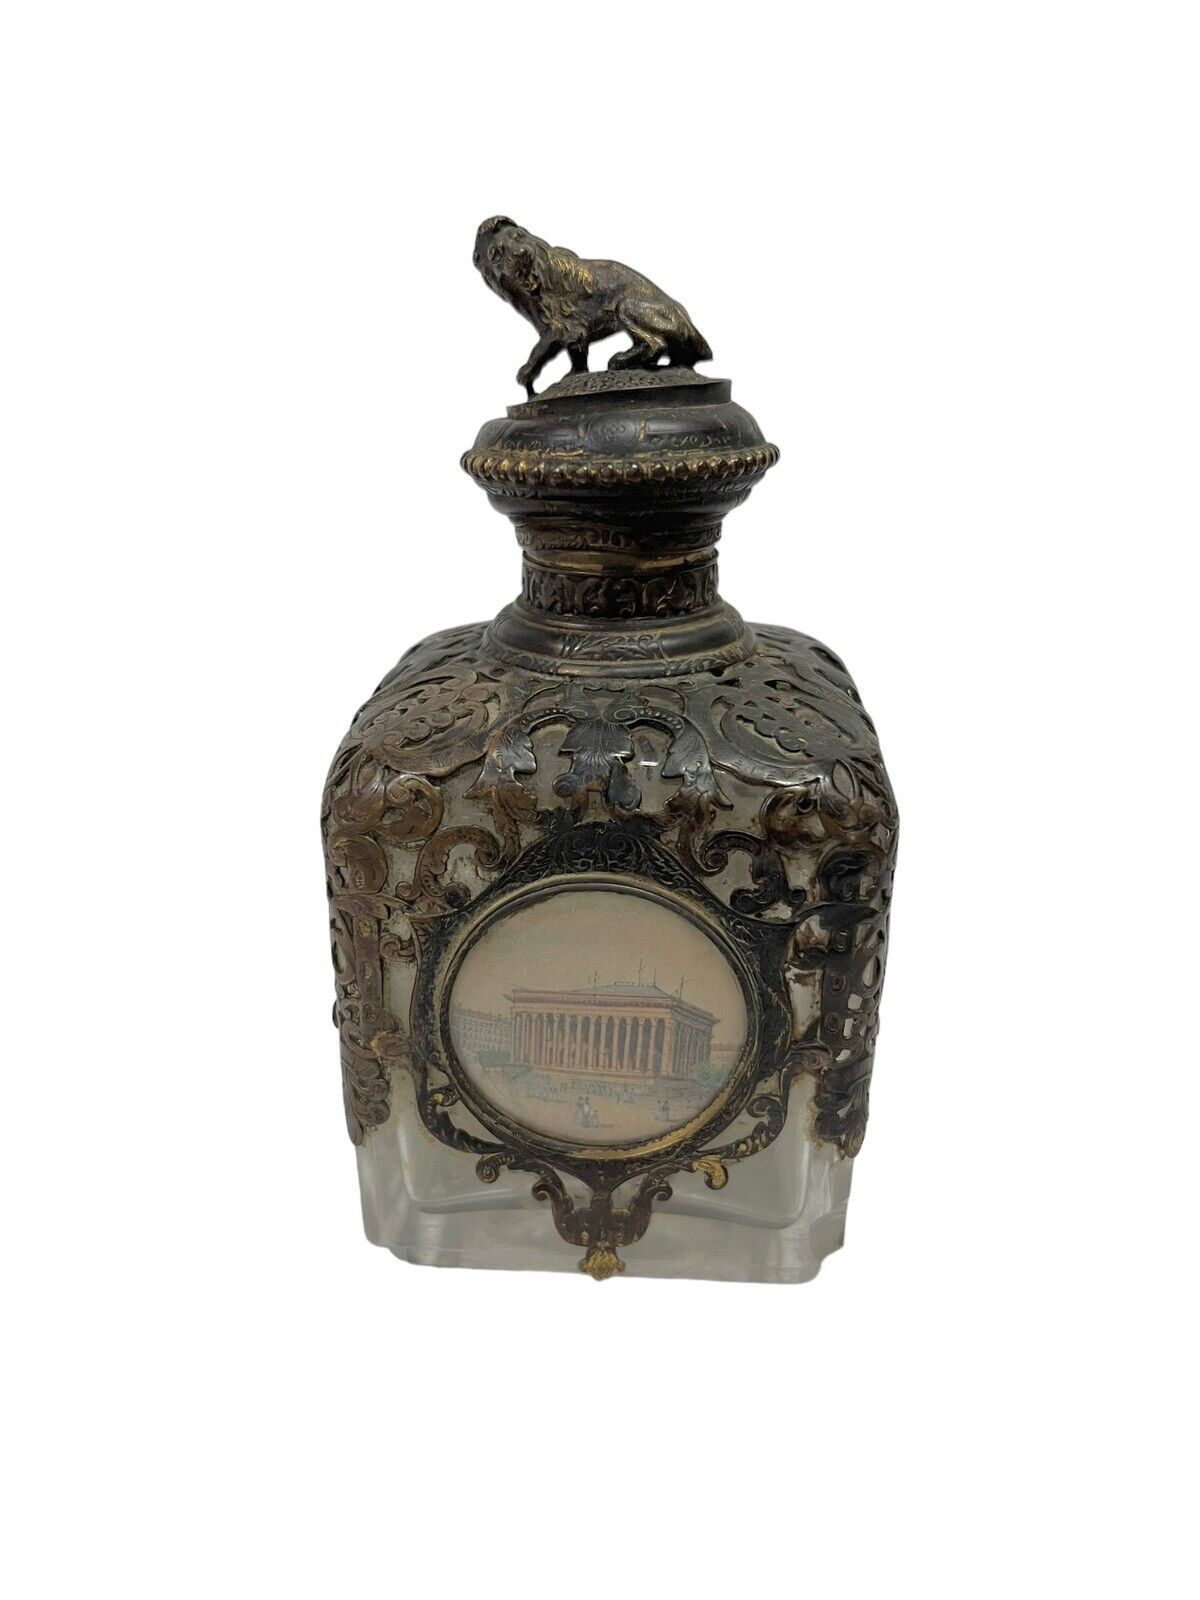 Antique French perfume or scent bottle circa 1860-1880 Napoleon III / Grand Tour